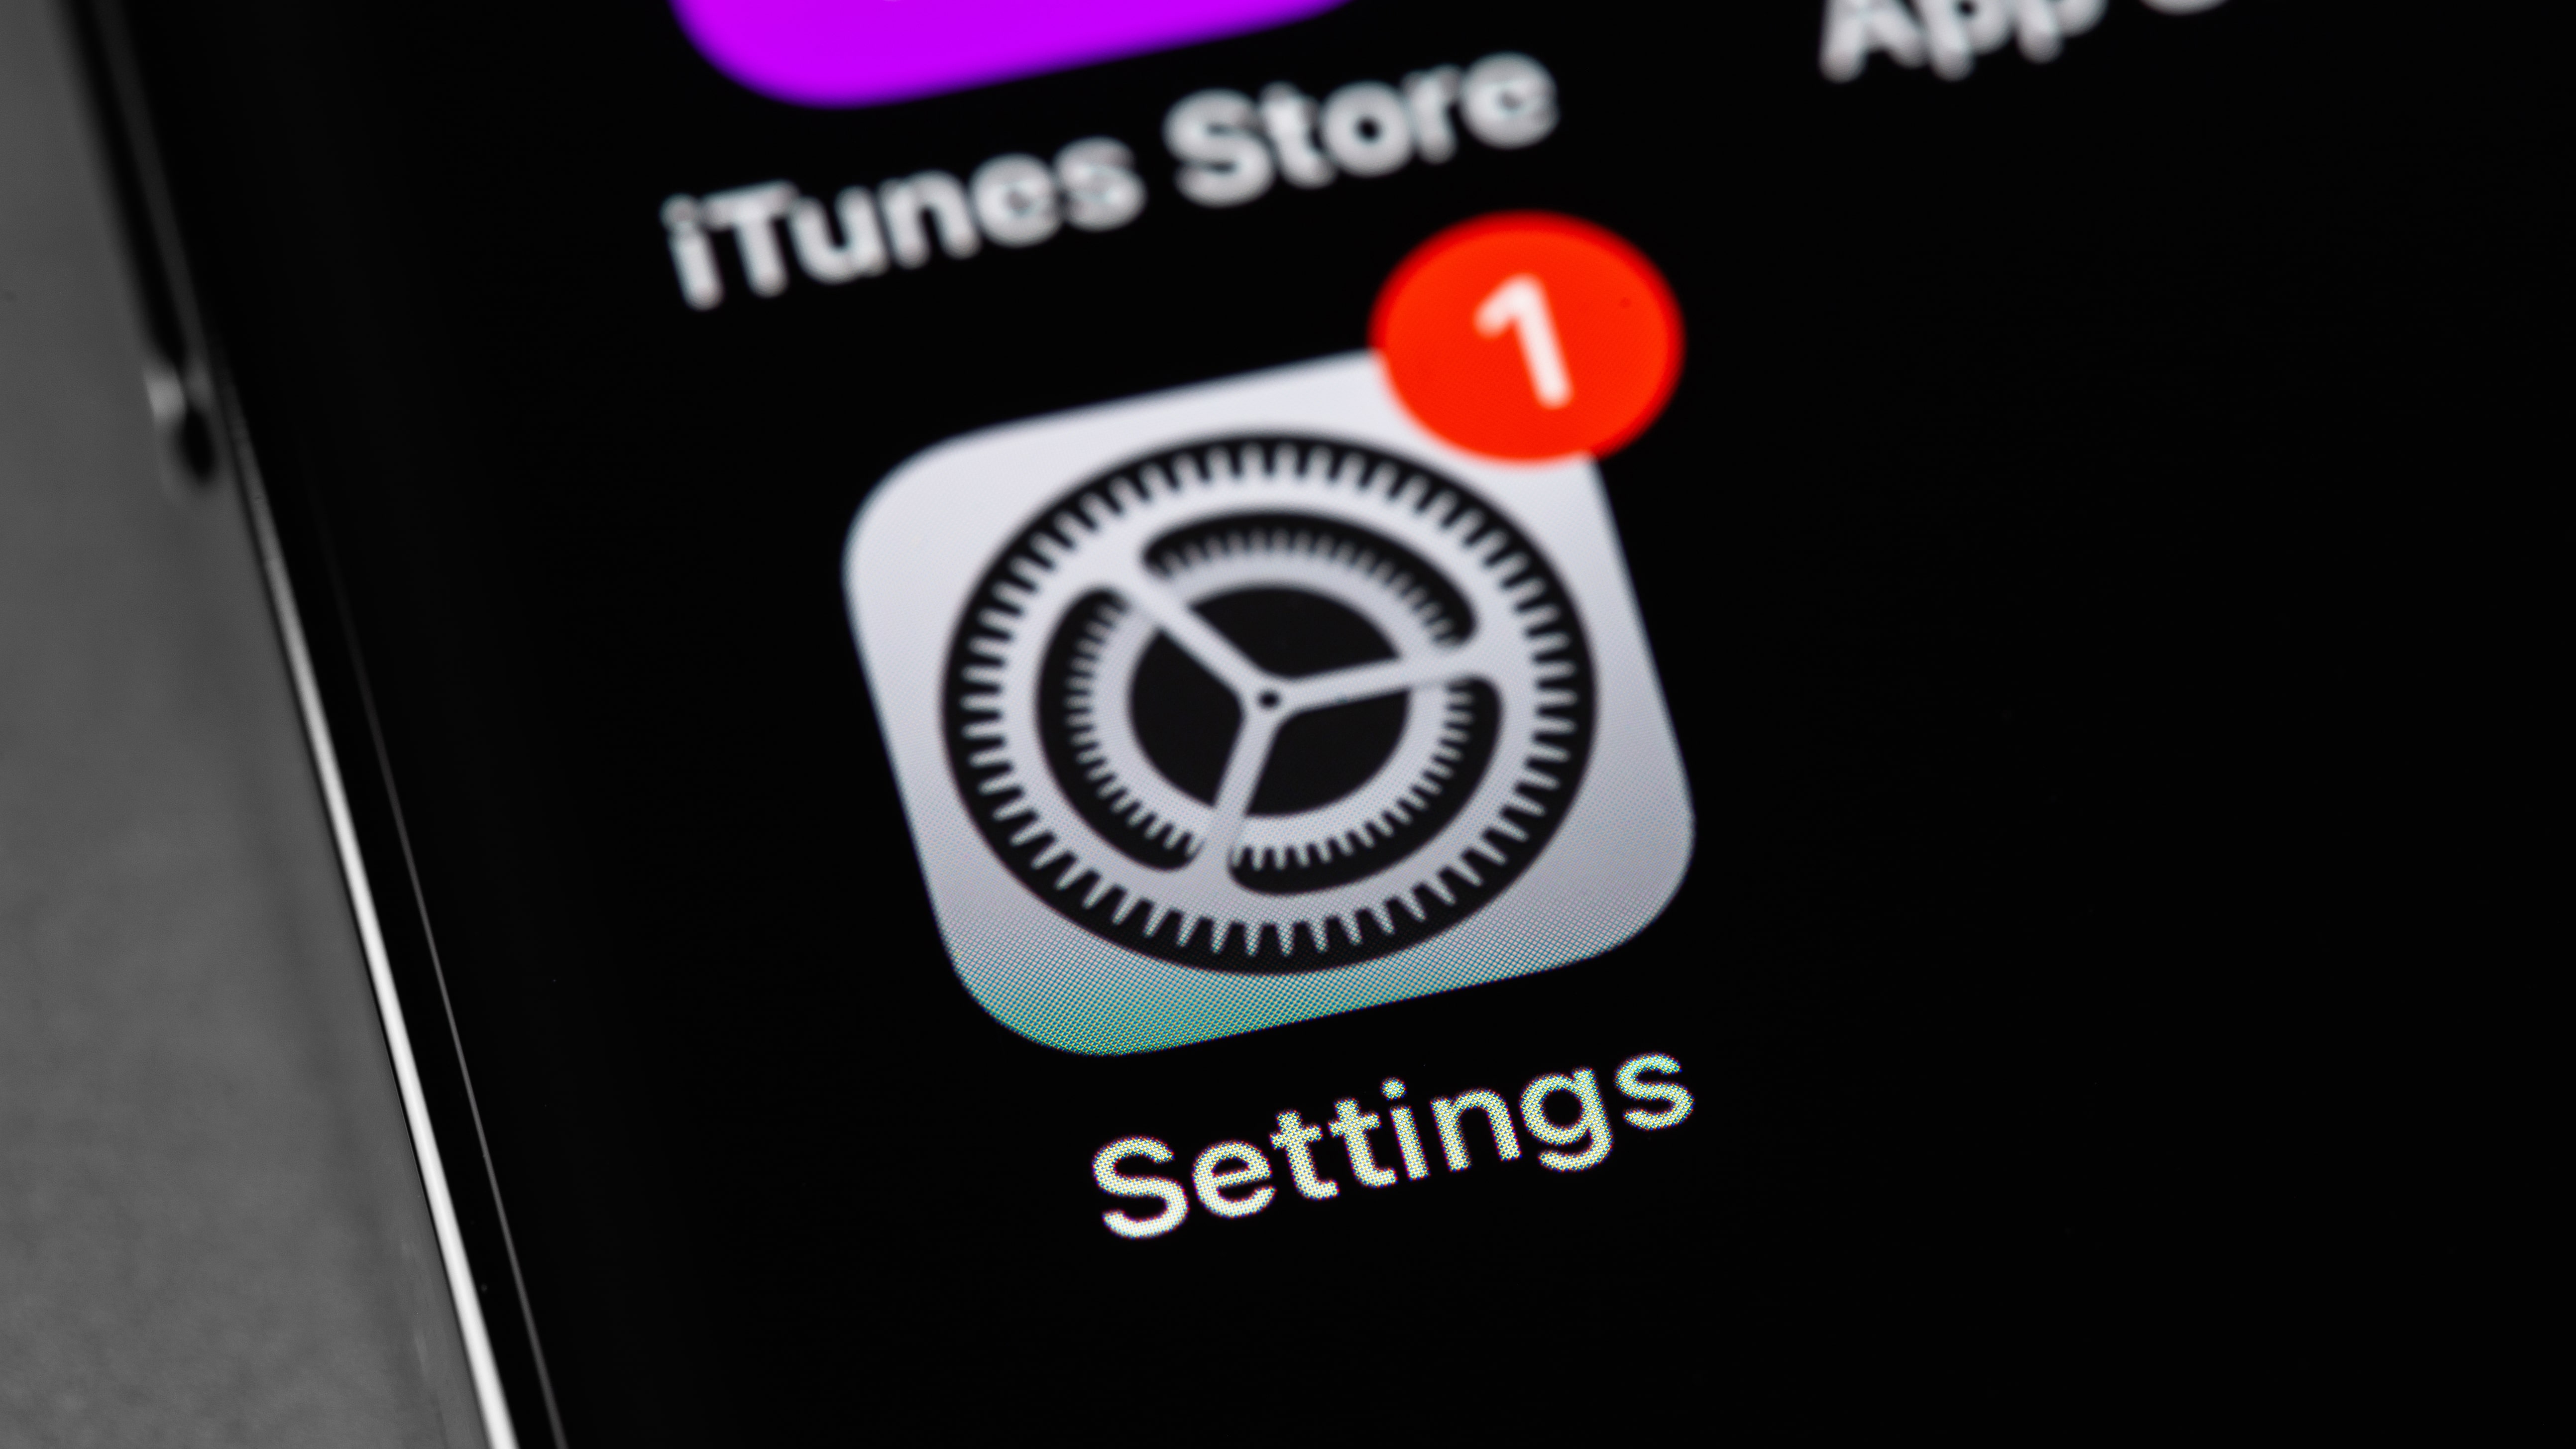 The iPhone settings wheel